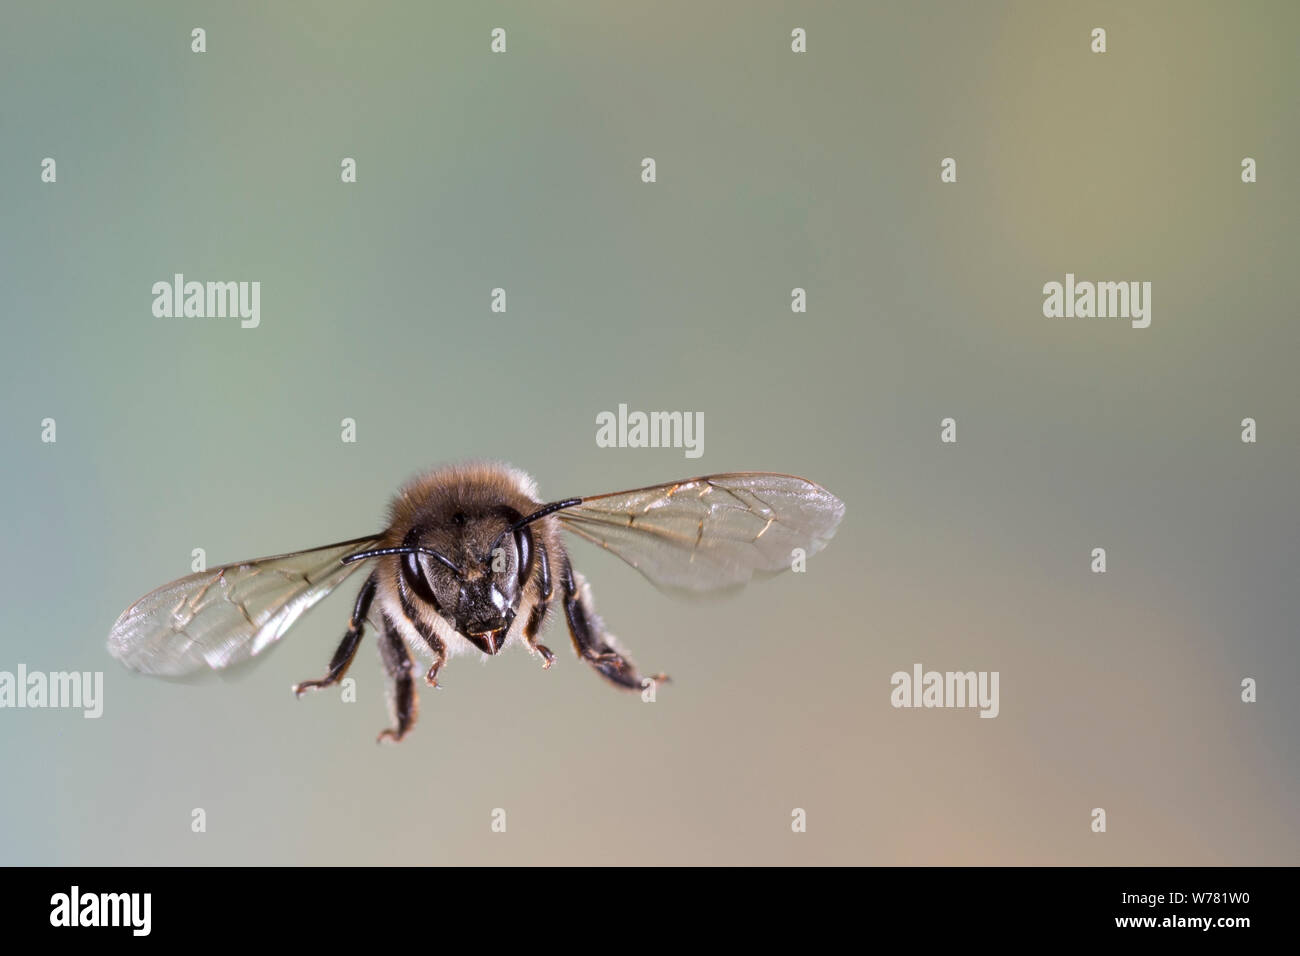 Honigbiene, Honig-Biene, Europäische Honigbiene, Westliche Honigbiene, Flug, fliegend, Biene Bienen, Apis mellifera, Apis mellifica, miel de abeja, colmena Foto de stock